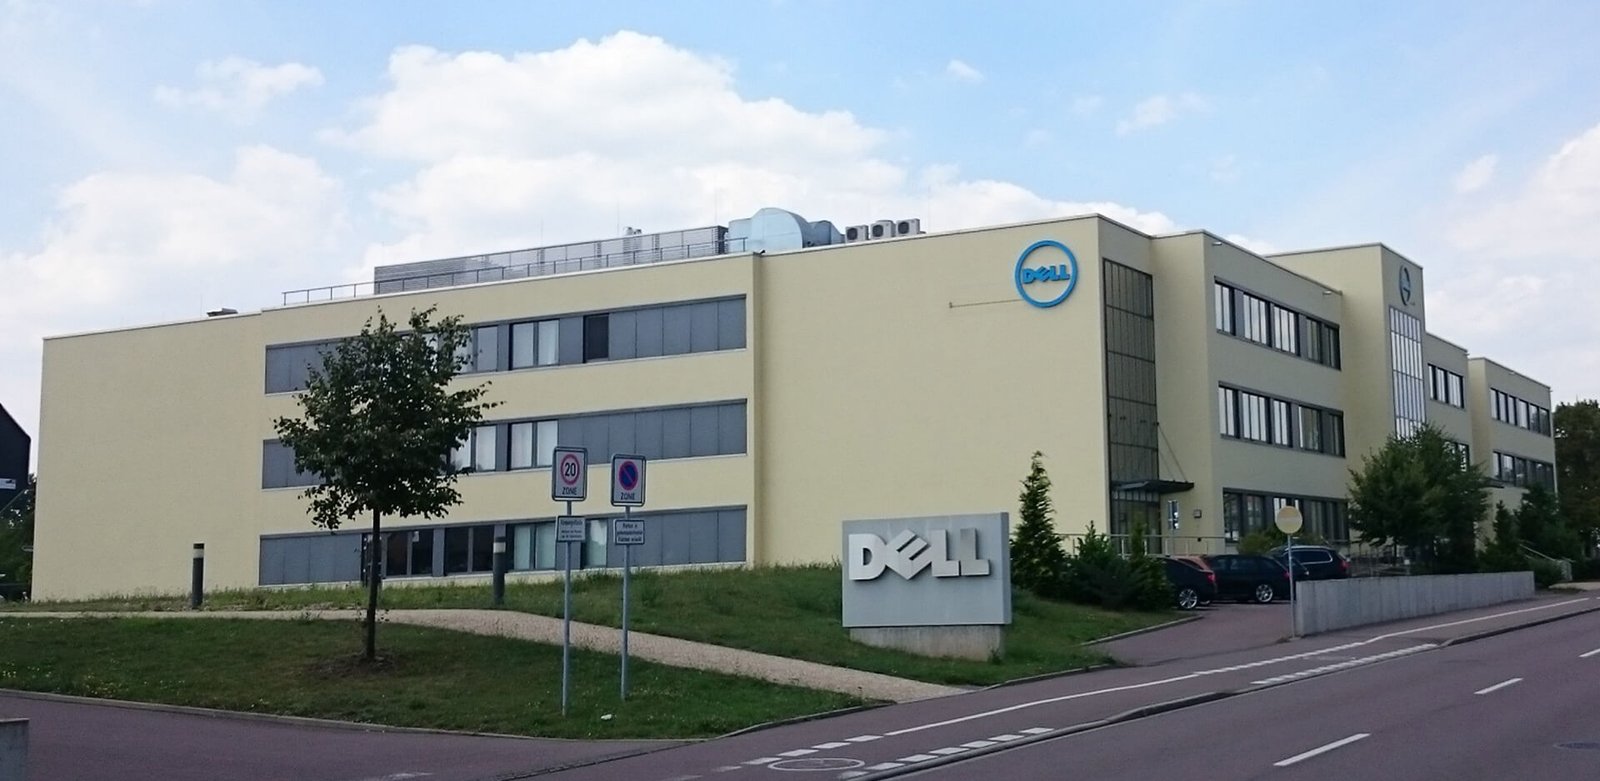 Dell building exterior